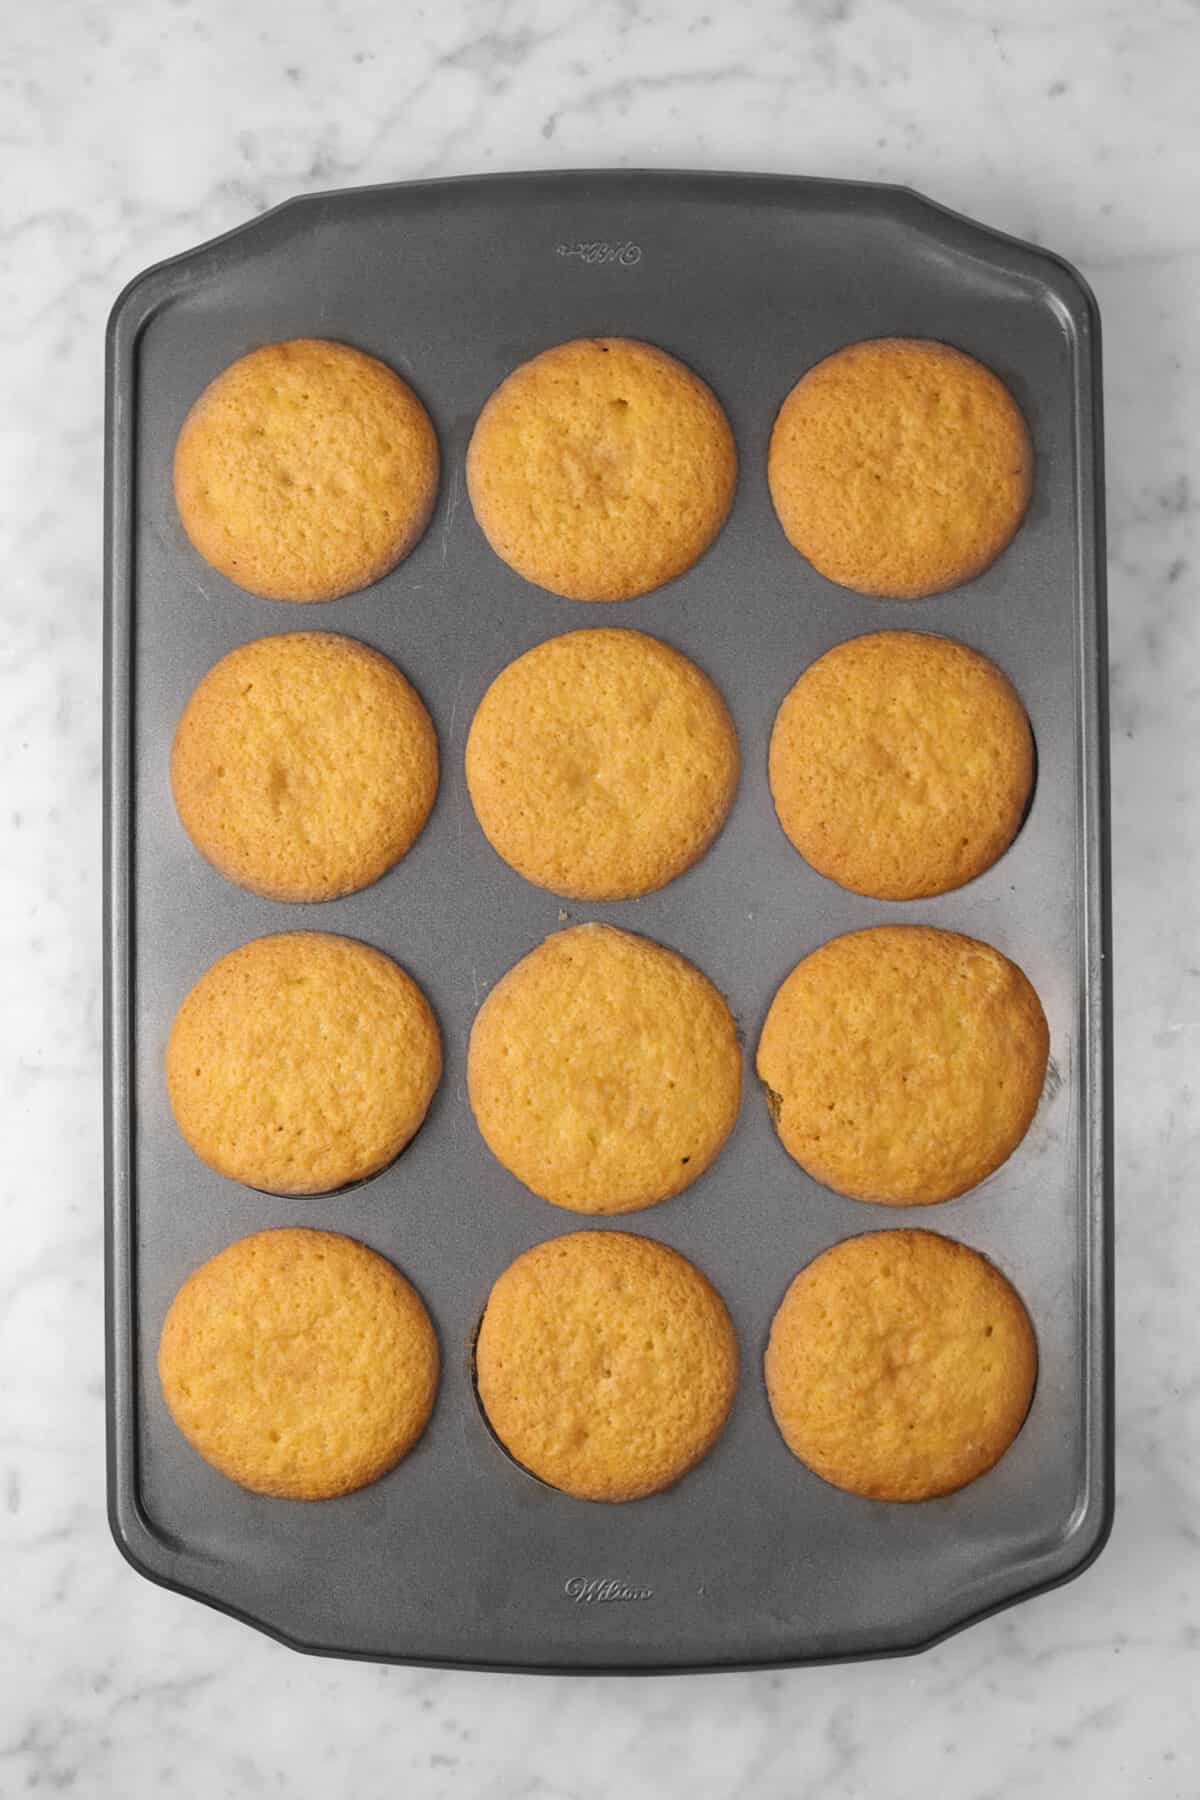 Twelve baked butterbeer cupcakes in a pan